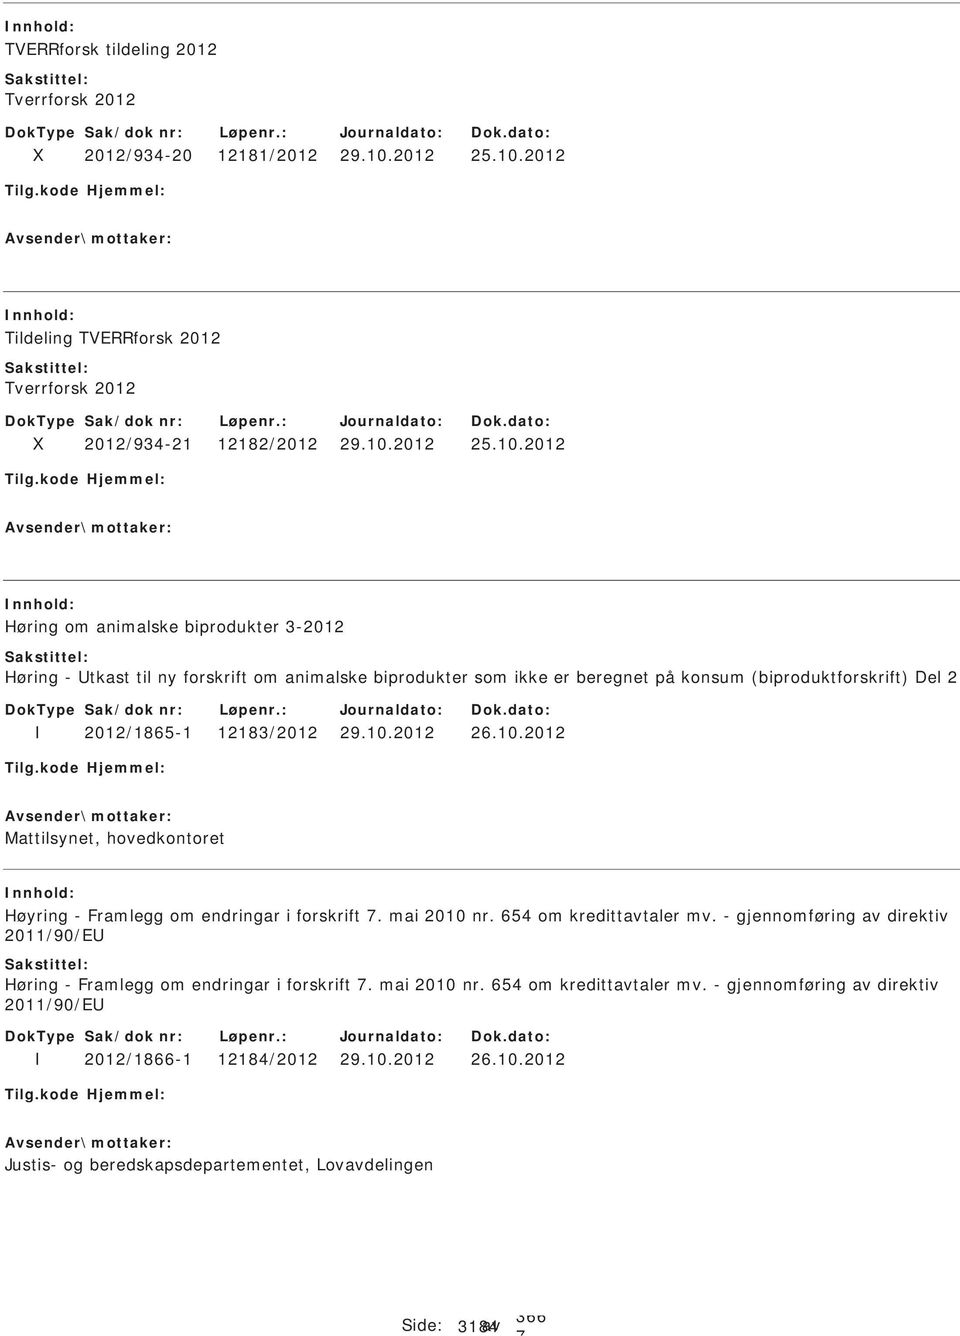 2012 Tildeling TVERRforsk 2012 Tverrforsk 2012 2012/934-21 12182/2012 29.10.